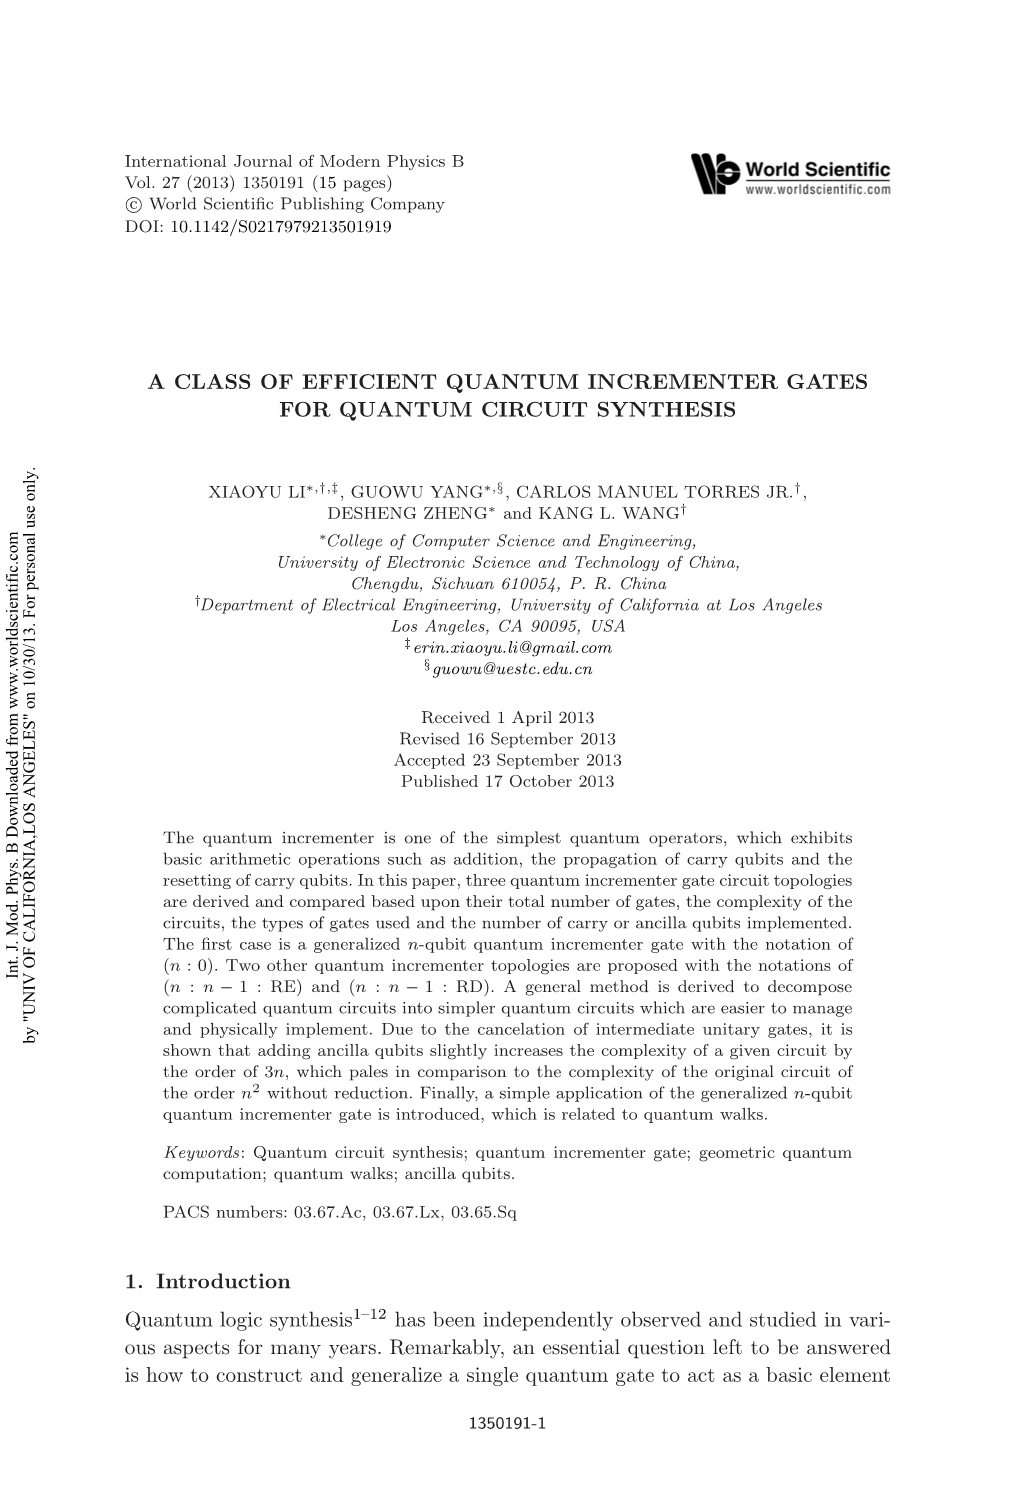 A Class of Efficient Quantum Incrementer Gates for Quantum Circuit Synthesis